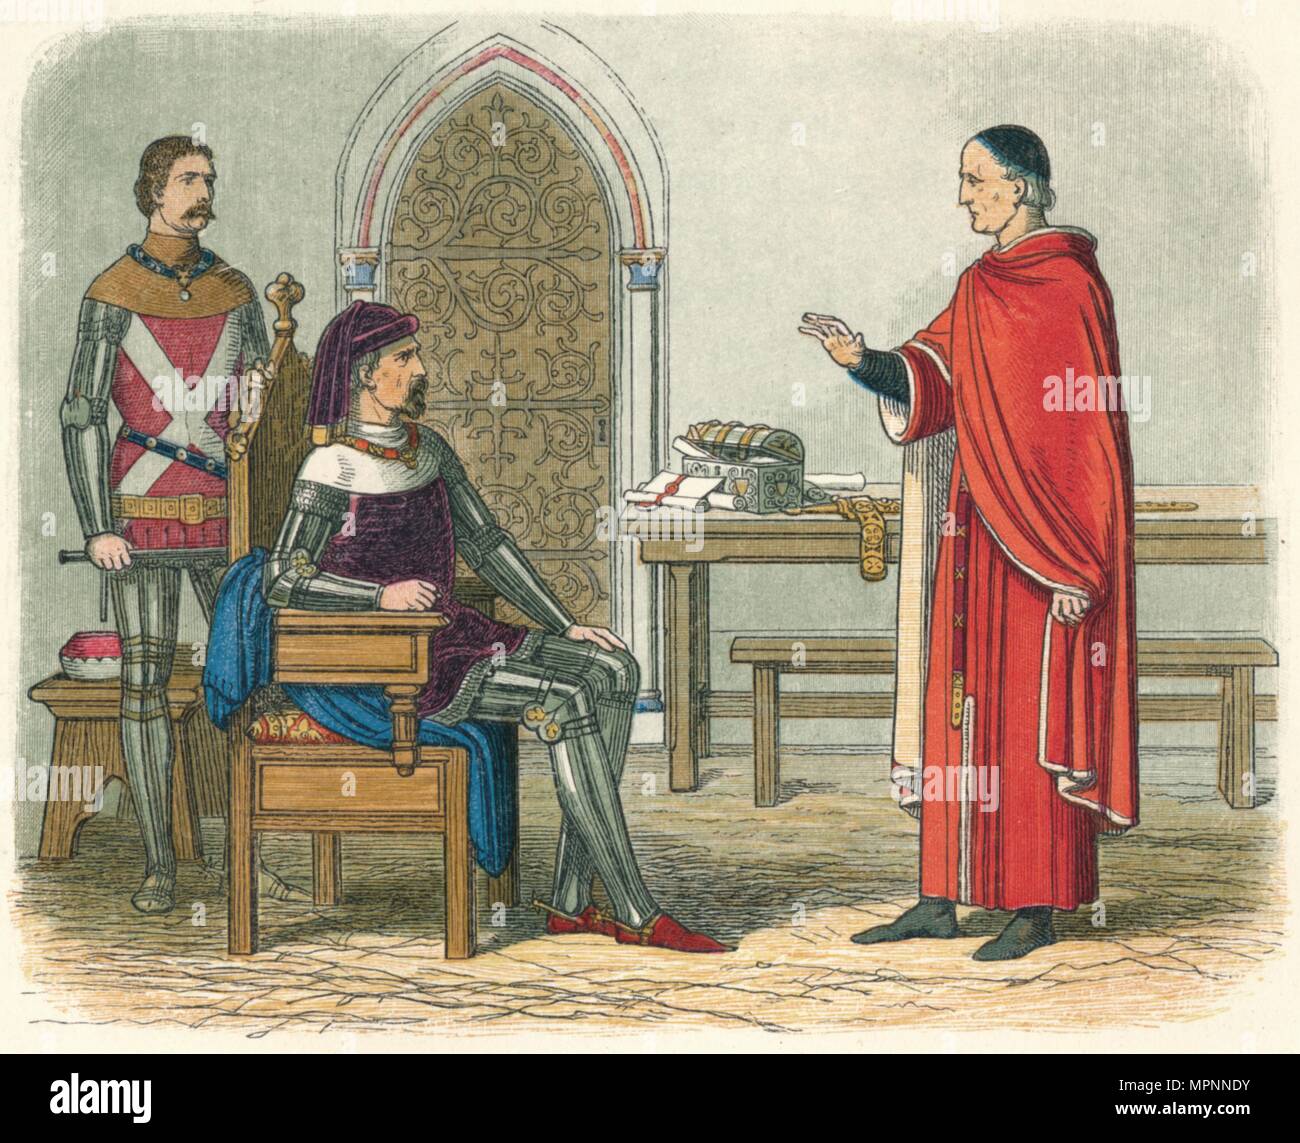 'Gascoigne refuses to sentence a prelate or peer', 1405 (1864). Artist: James William Edmund Doyle. Stock Photo